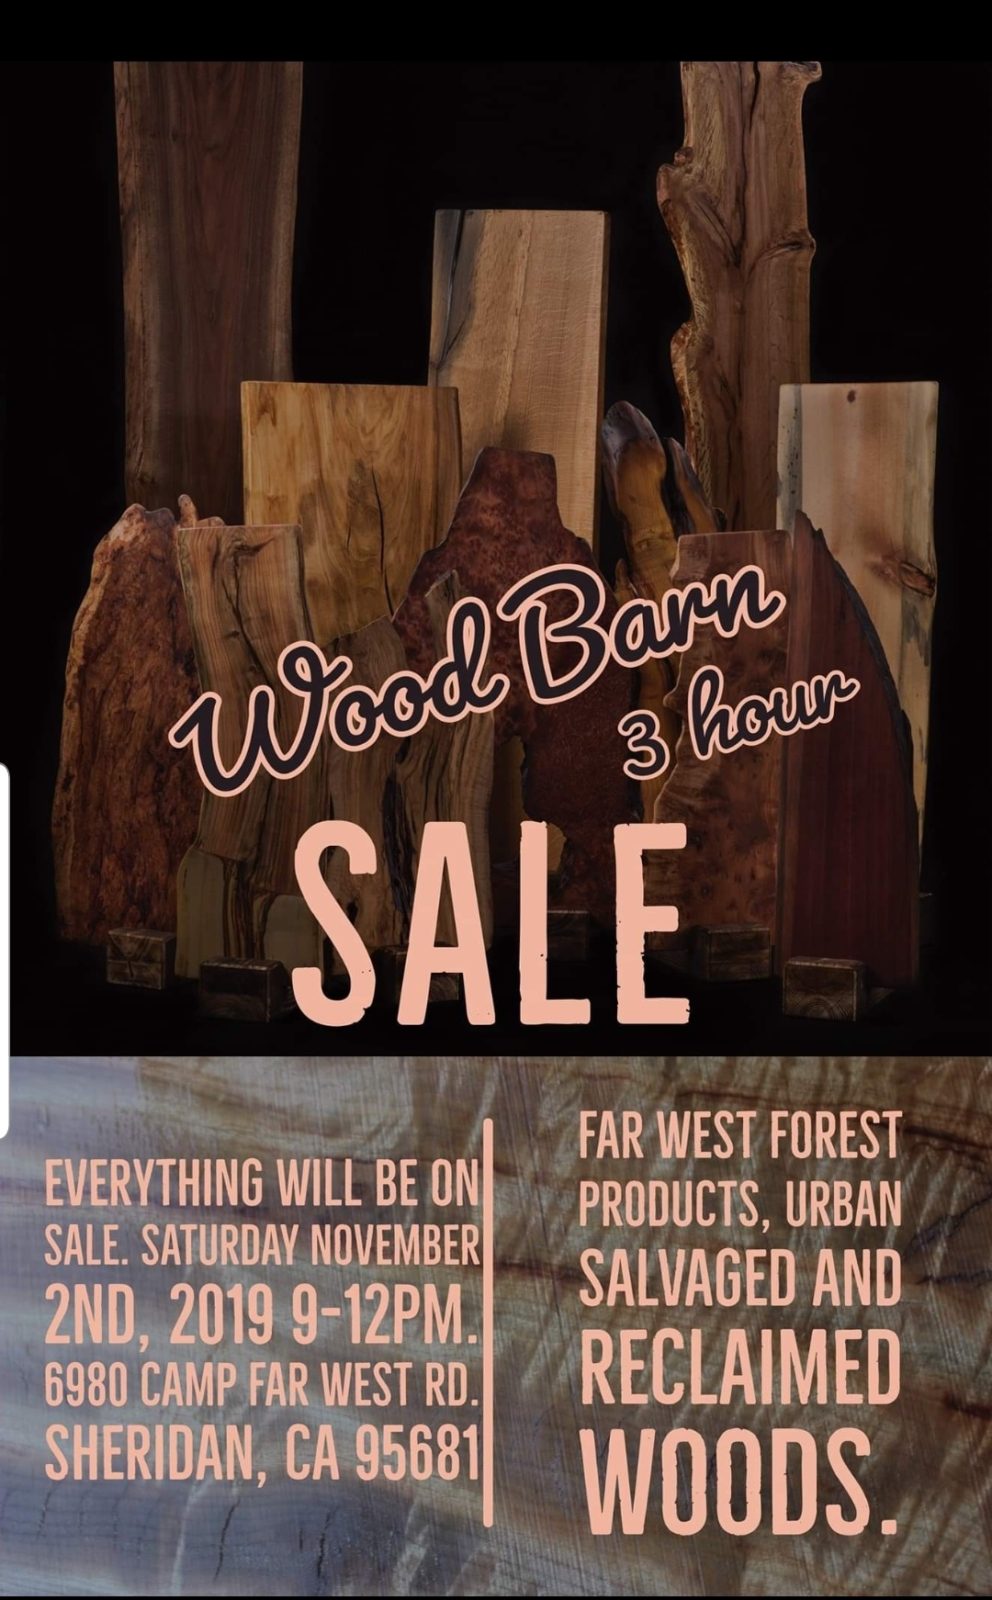 urban lumber collage of wood displayed in ad for nov 2nd urban lumber wood sale